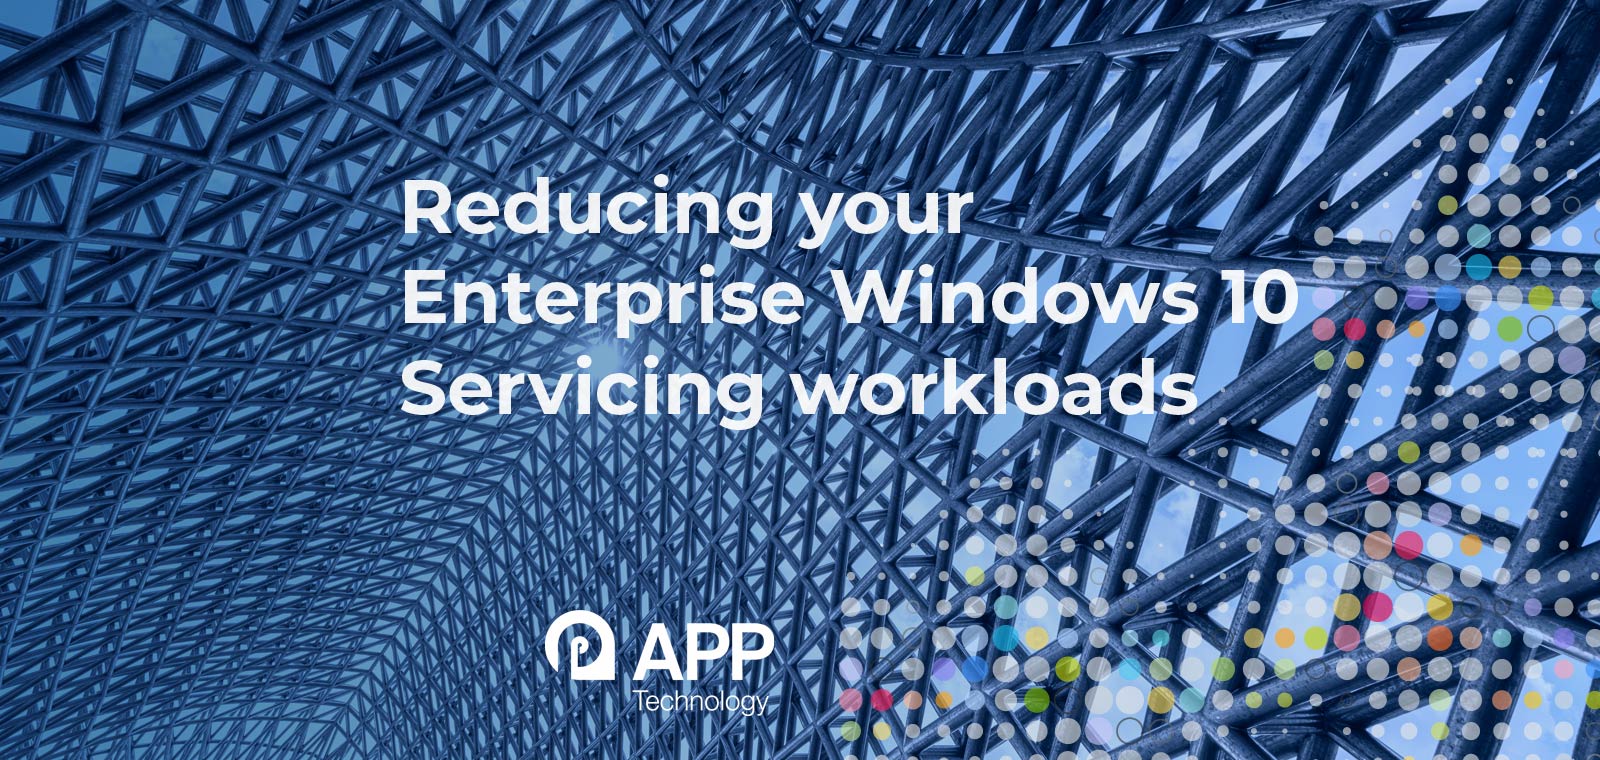 Reducing your Enterprise Windows 10 Servicing workloads